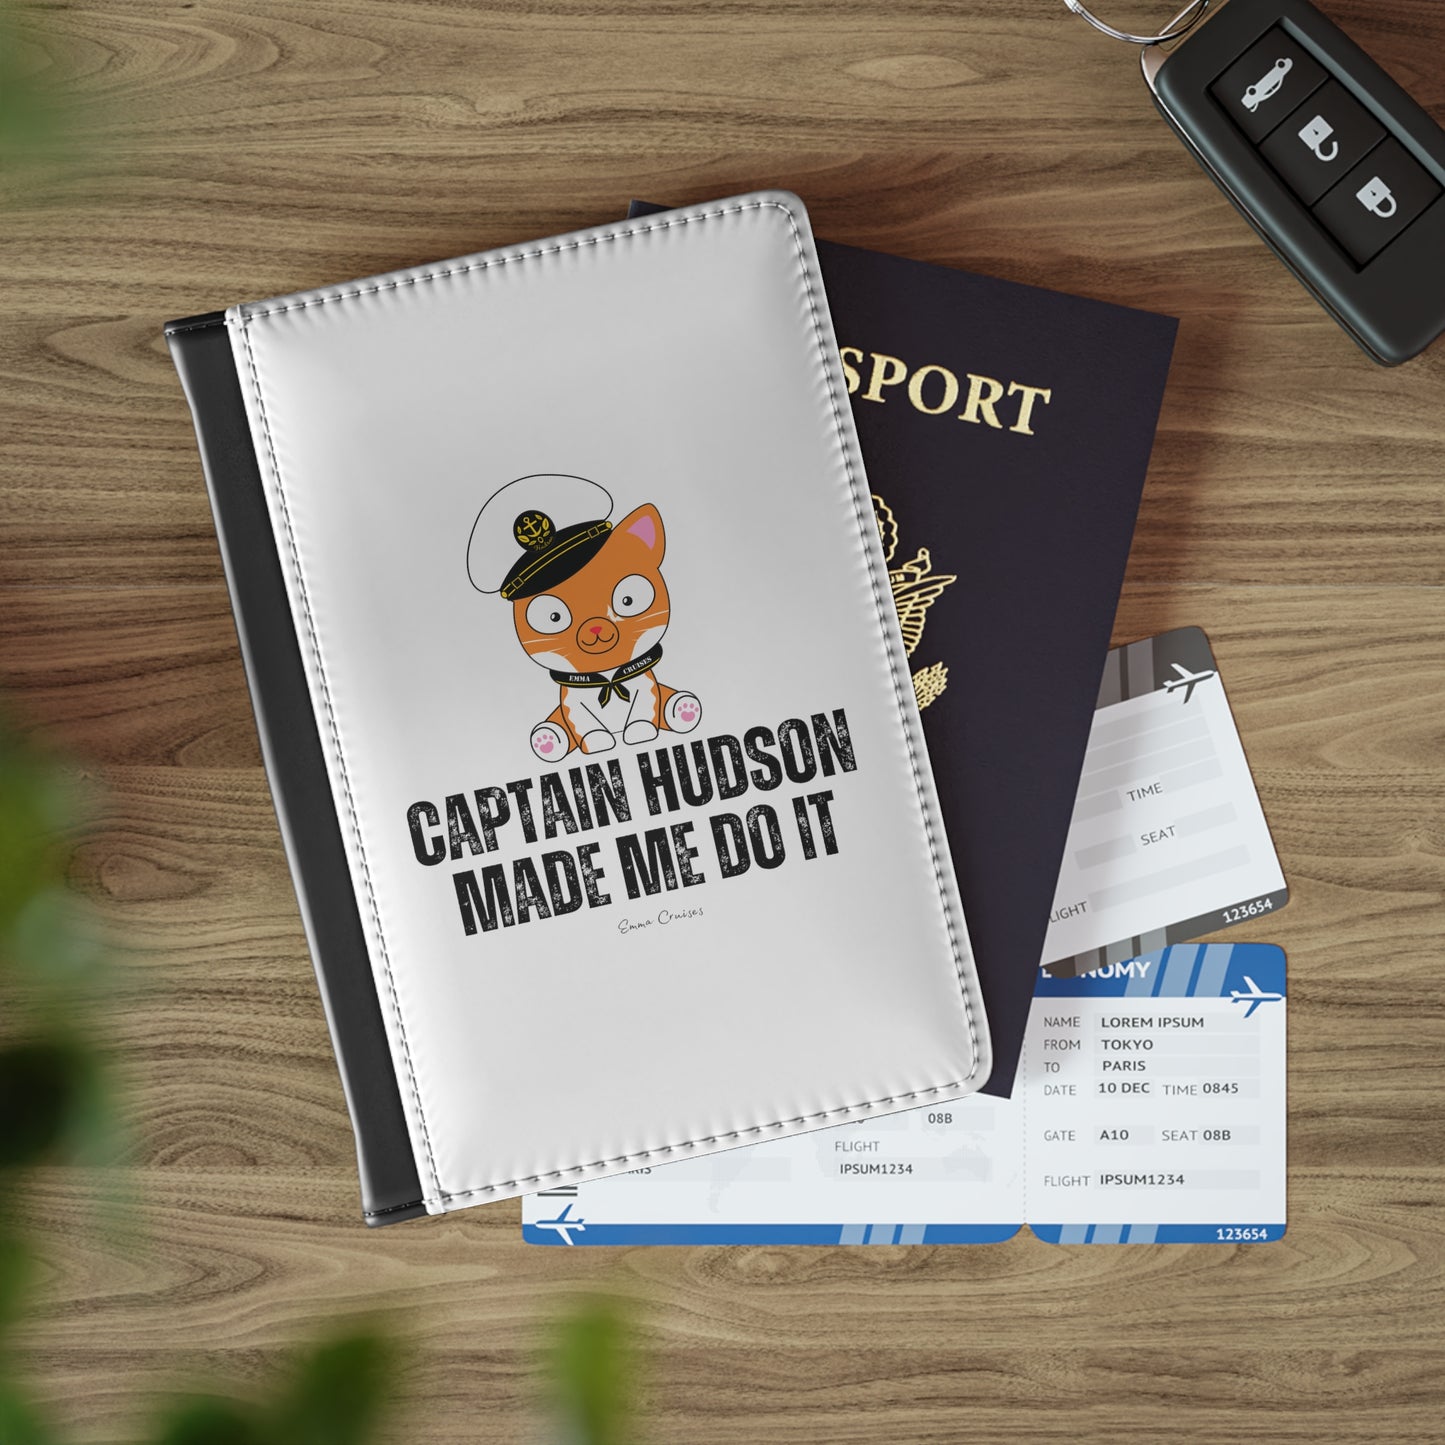 Captain Hudson Made Me Do It - Passport Cover